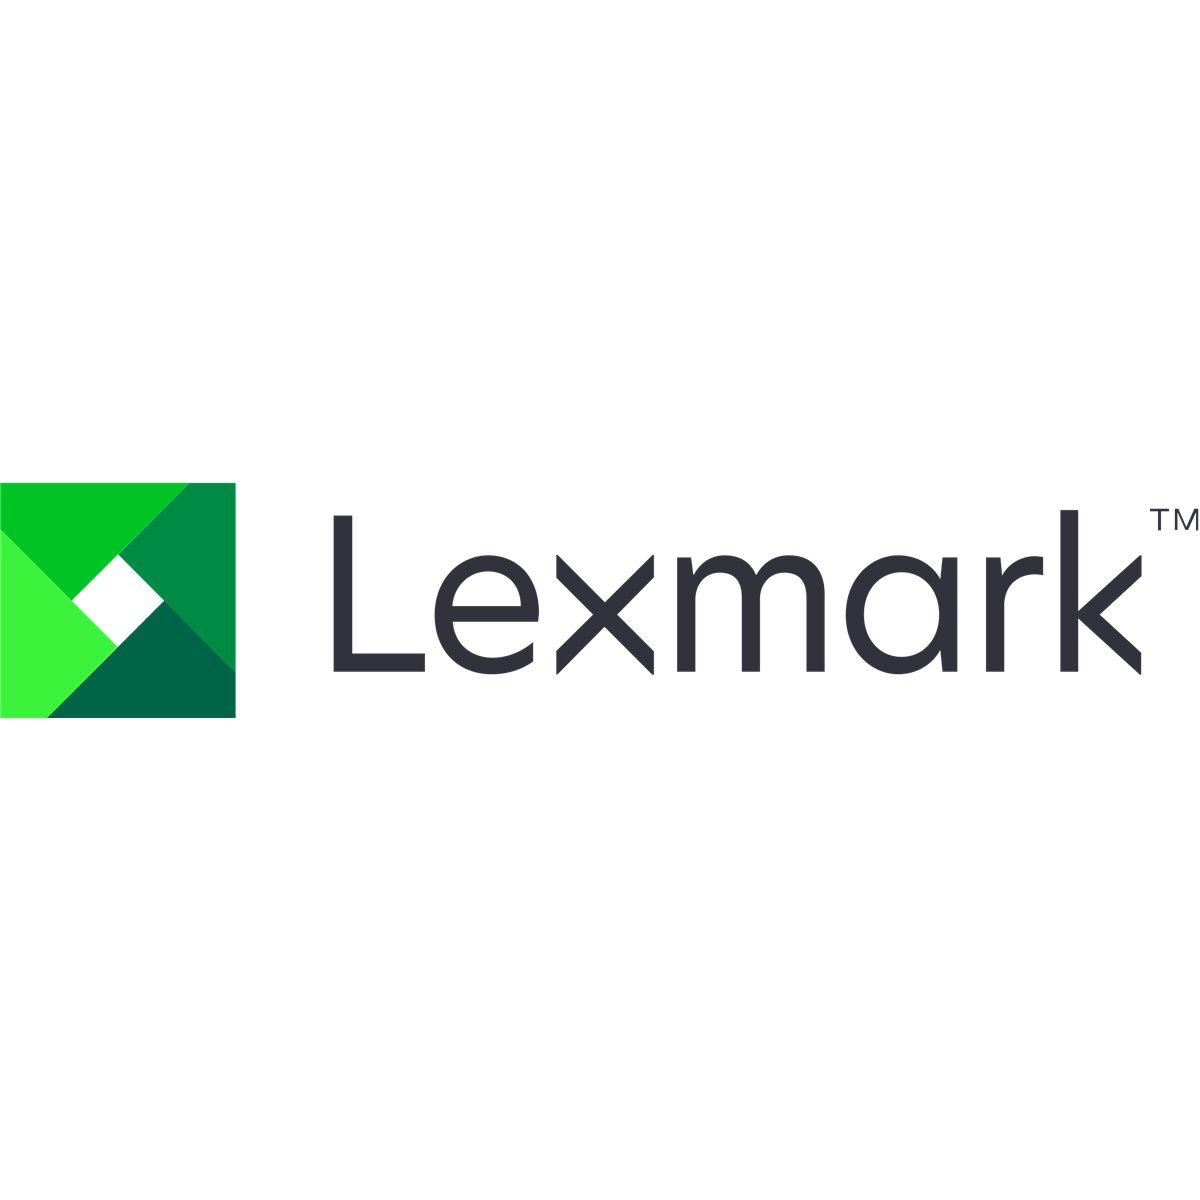 Lexmark Feeder 3tm/ttm tray